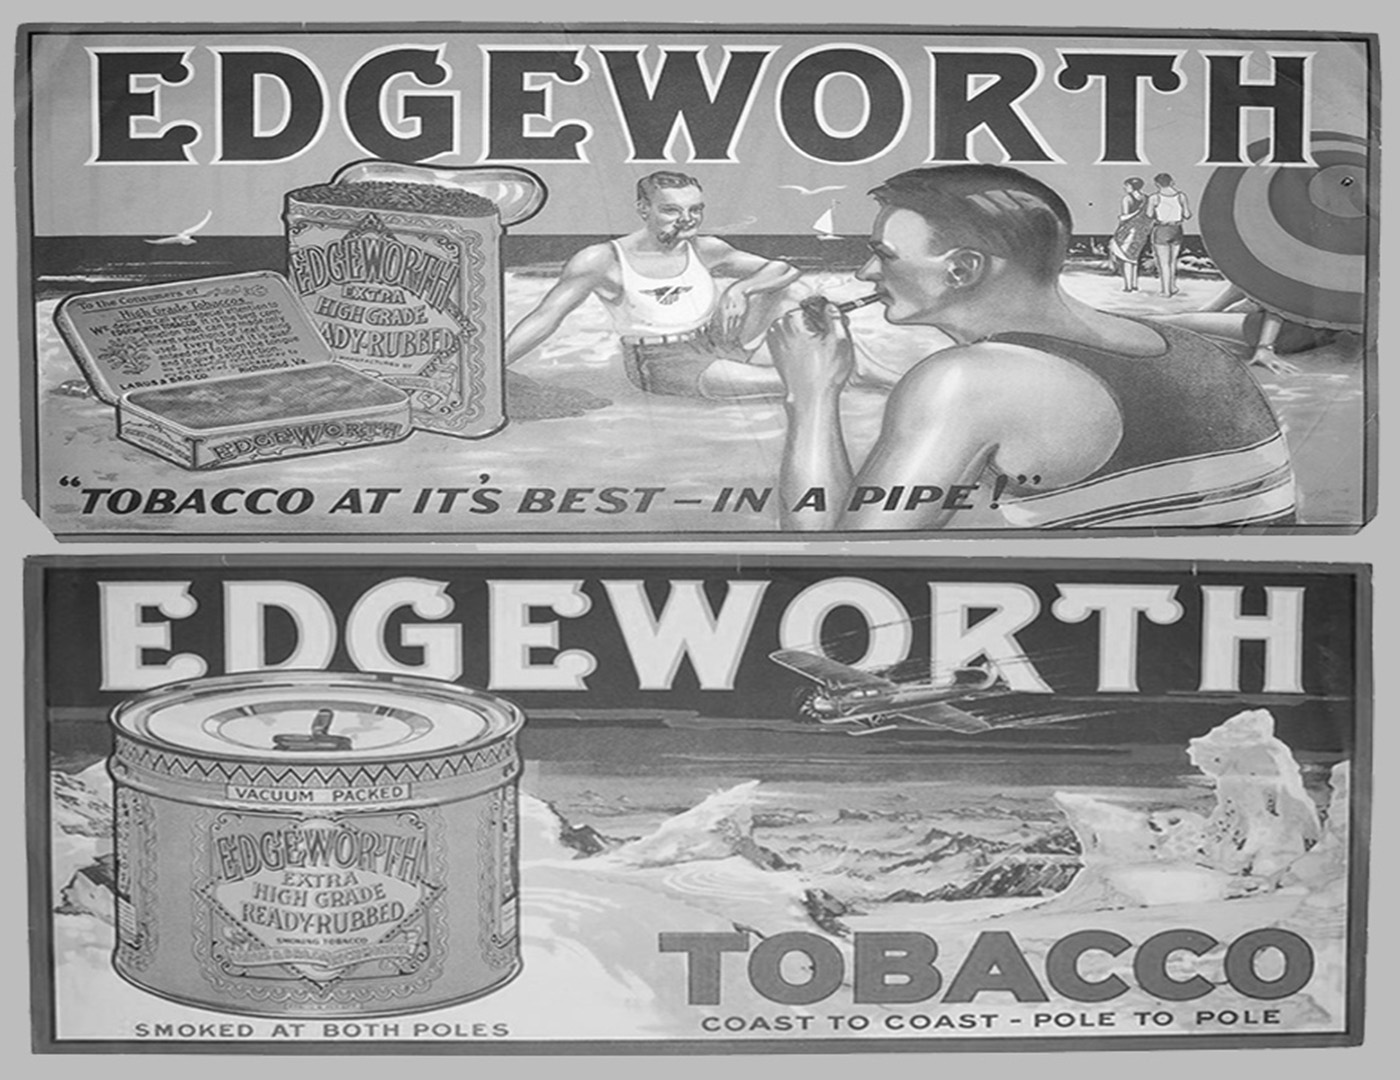 Original packaging for Edgeworth Tobacco